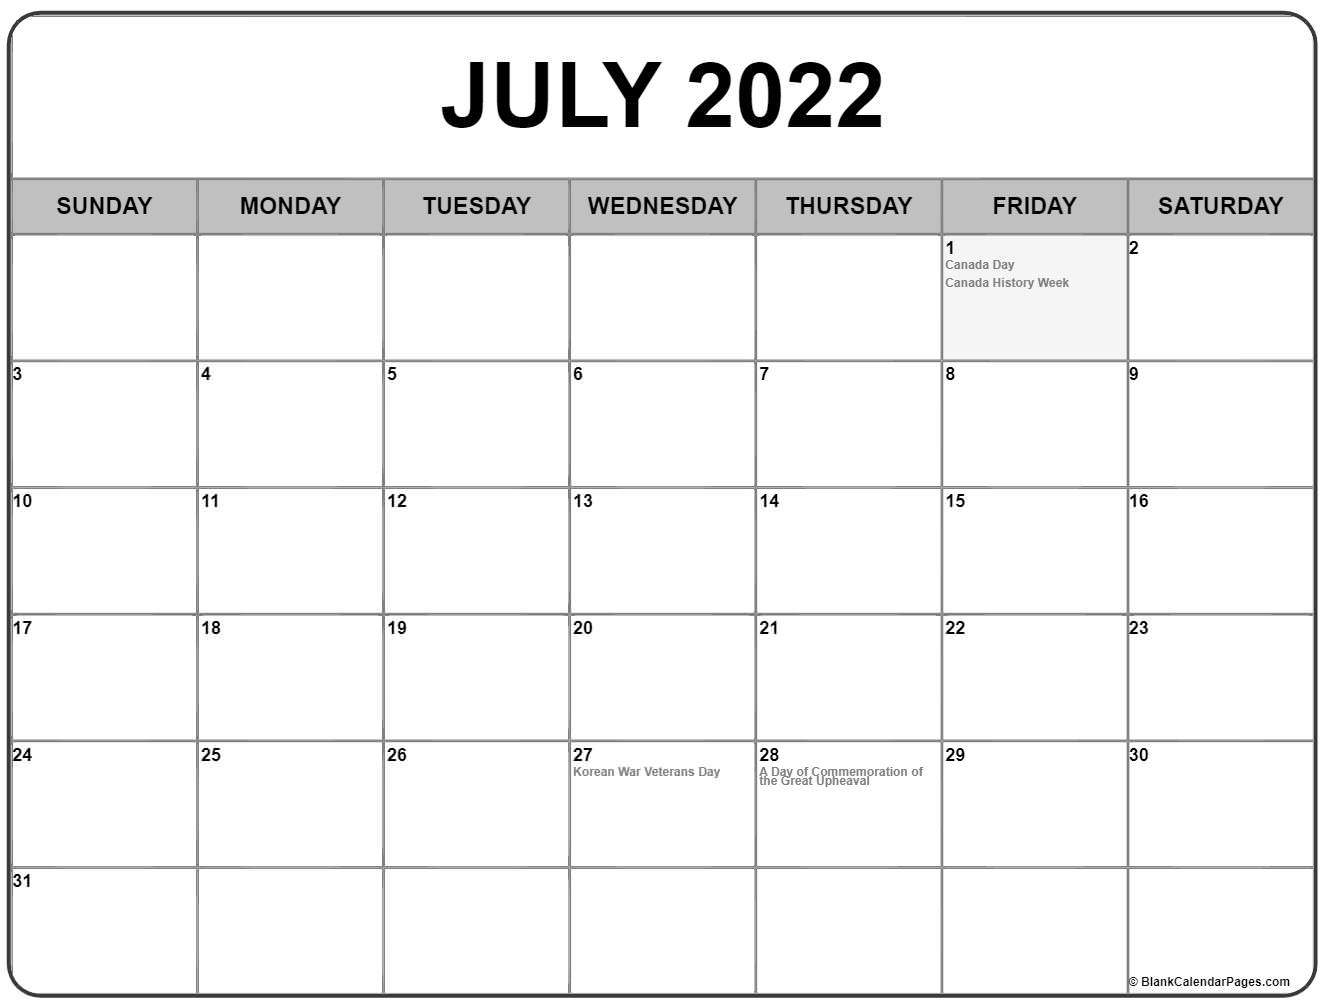 Get May 3 2022 Calendar